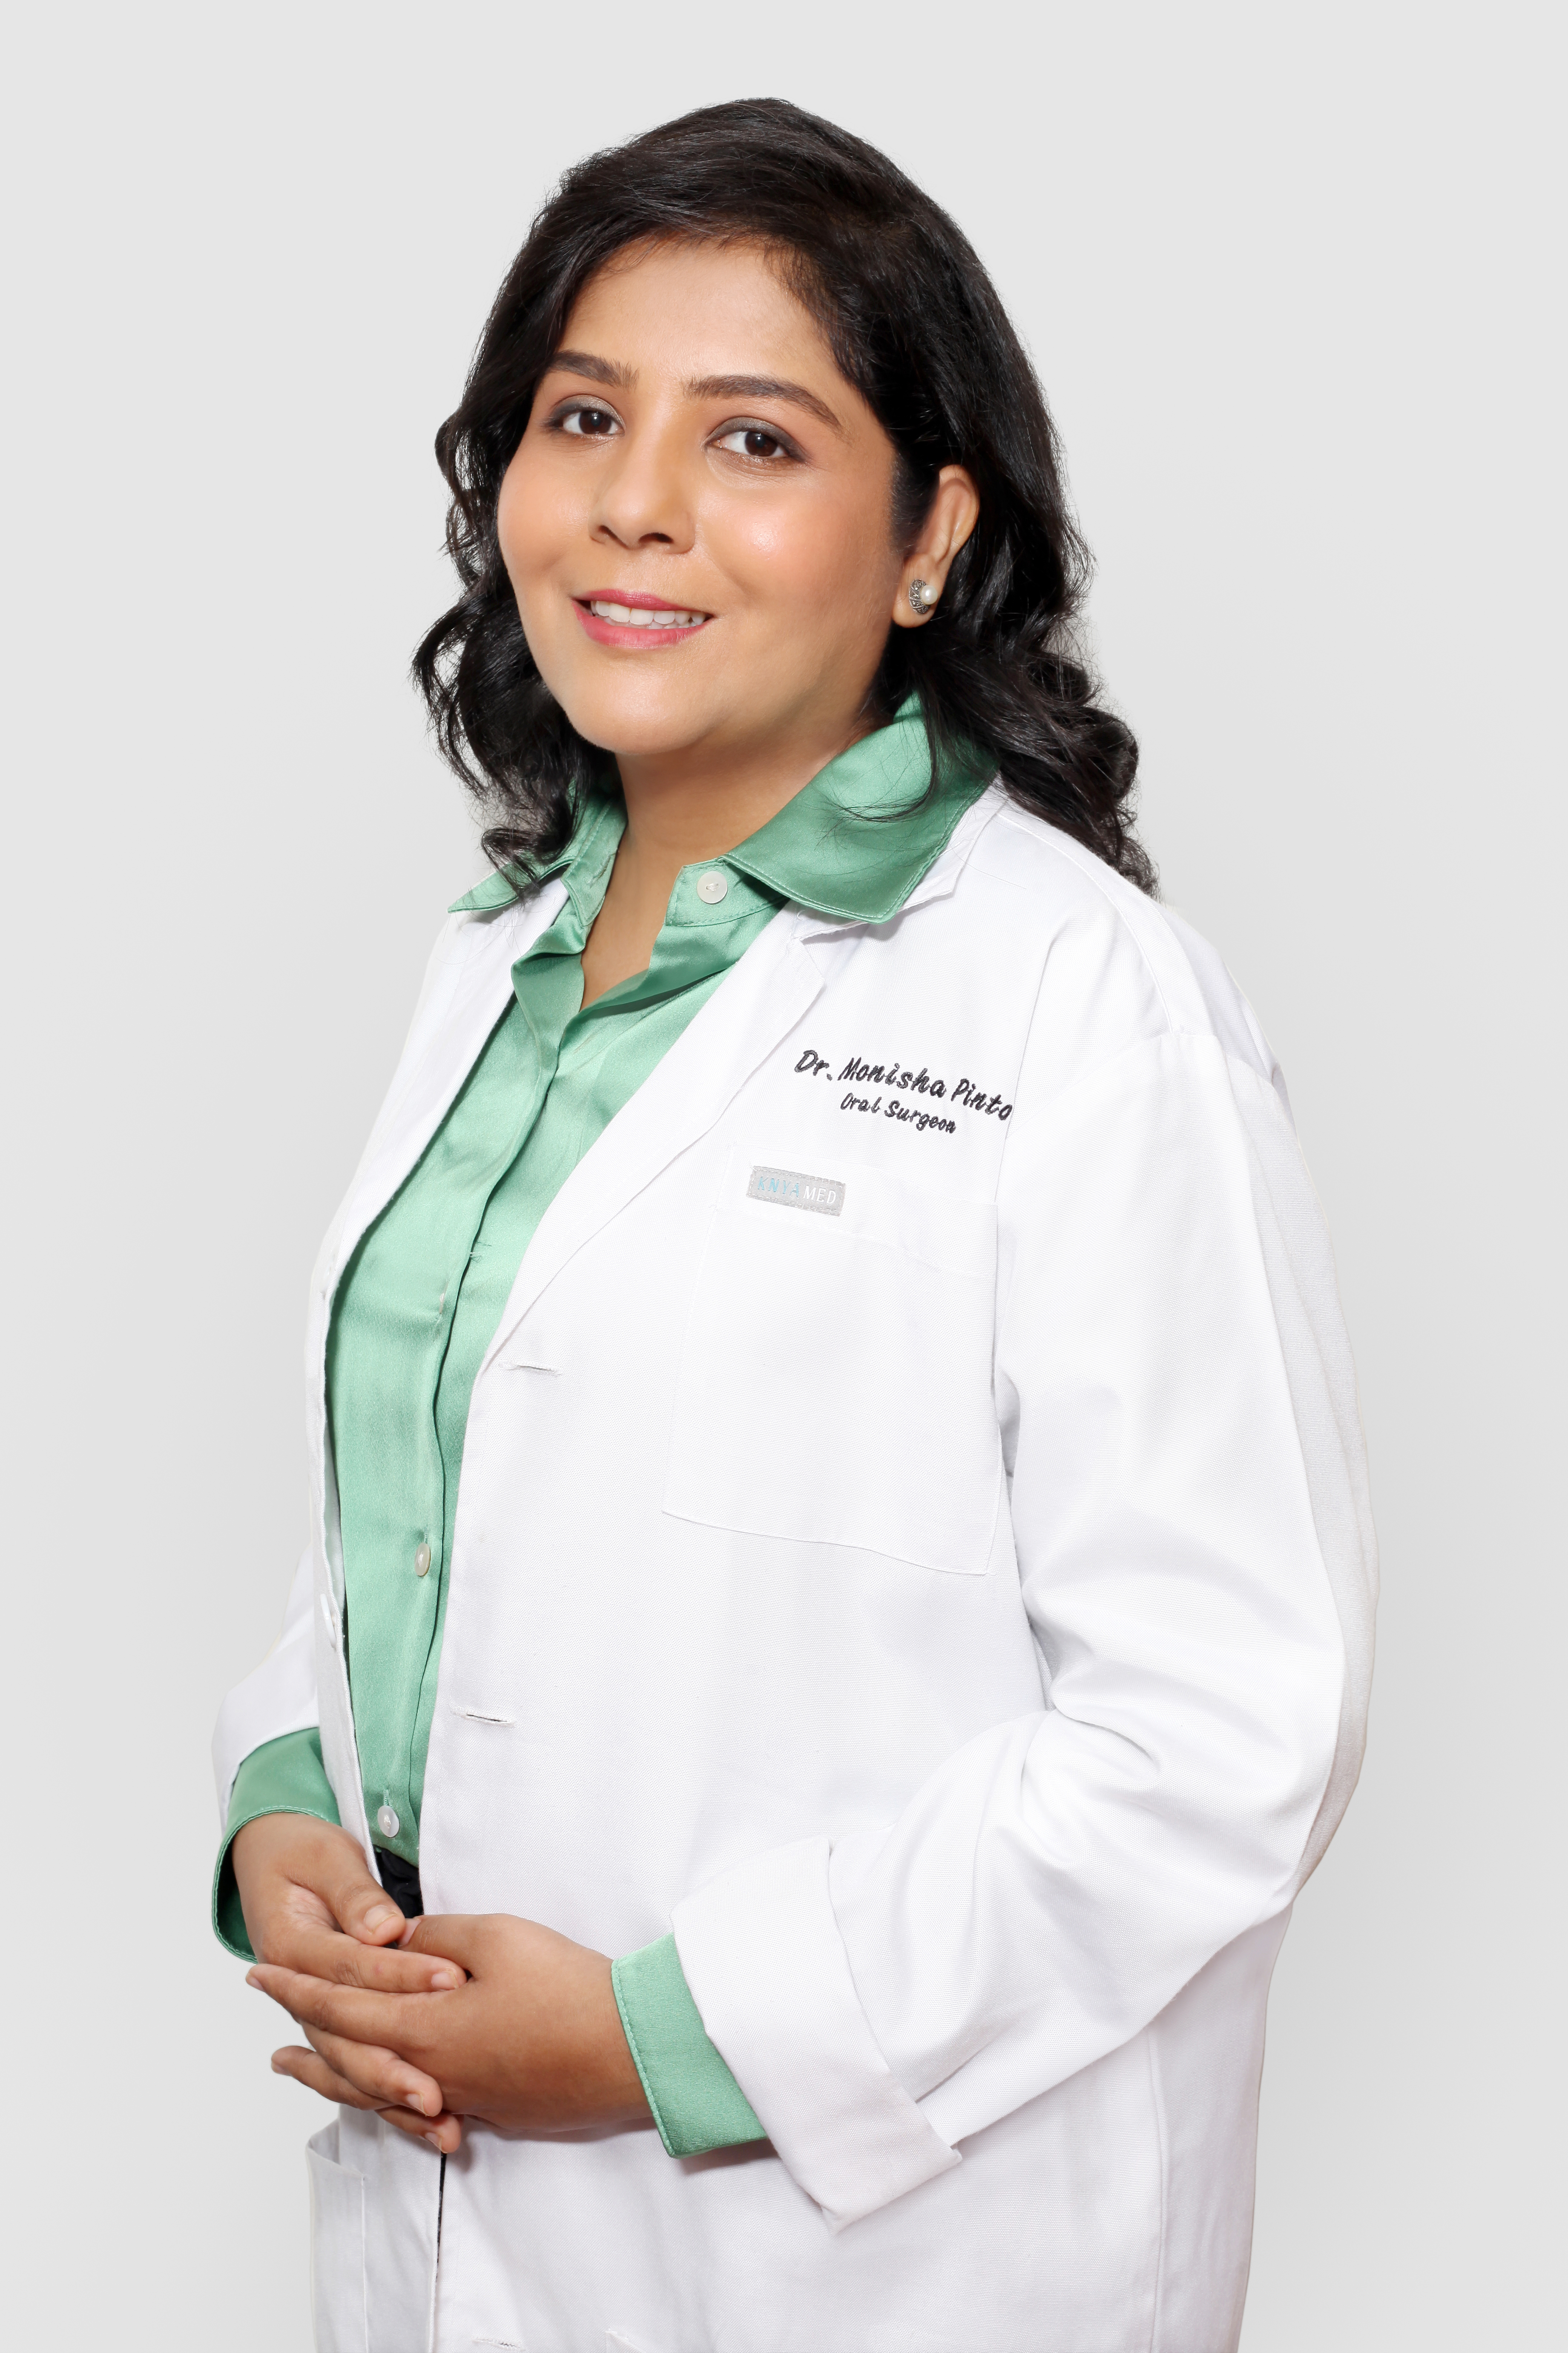 Dr Monisha Pinto